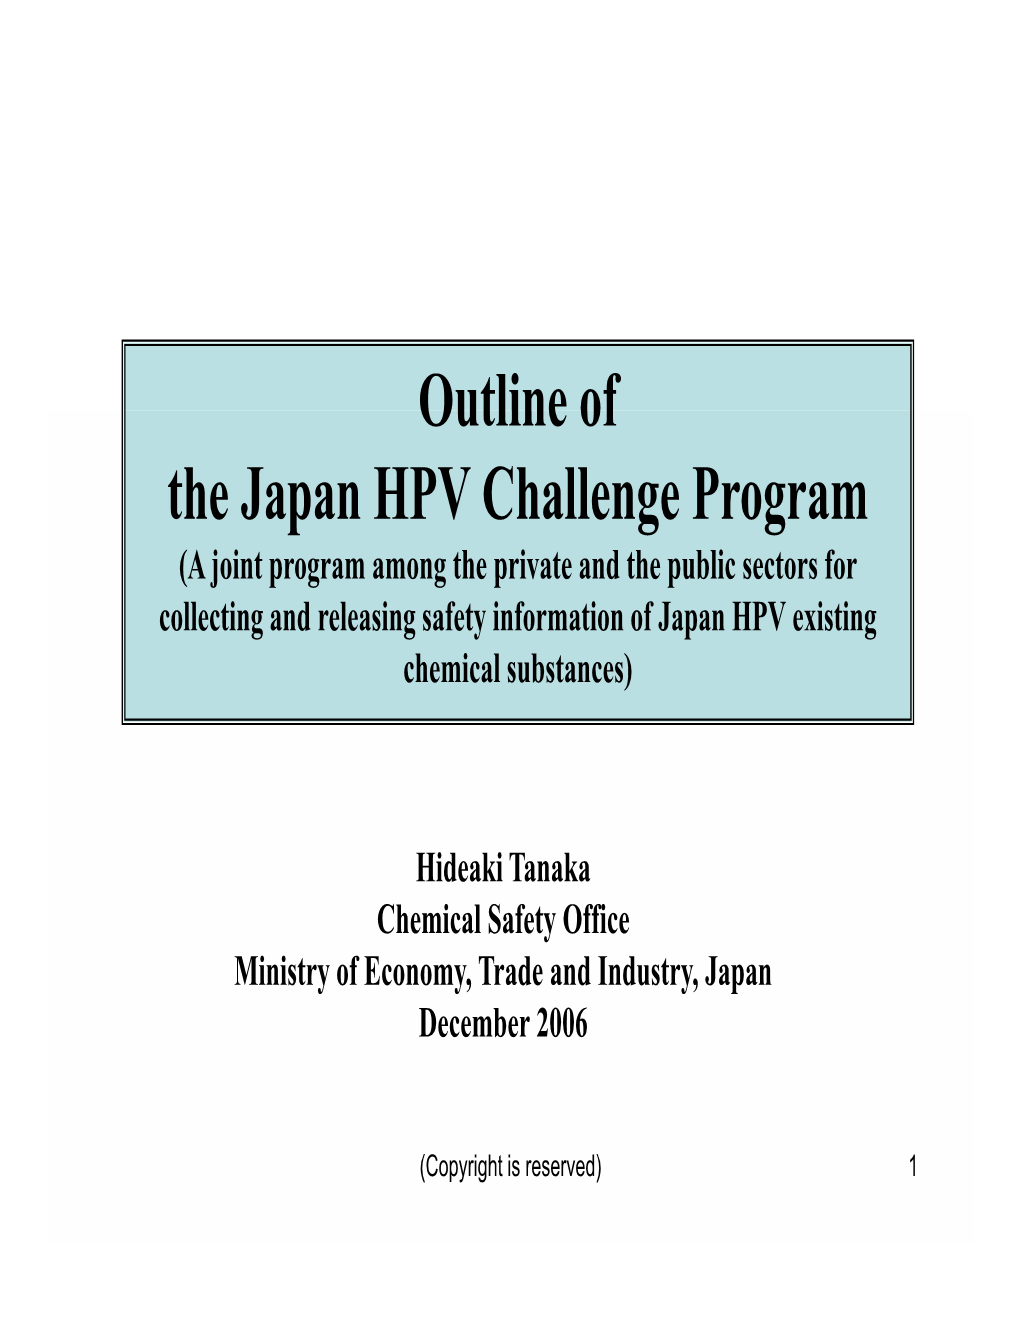 Outline of the Japan HPV Challenge Program